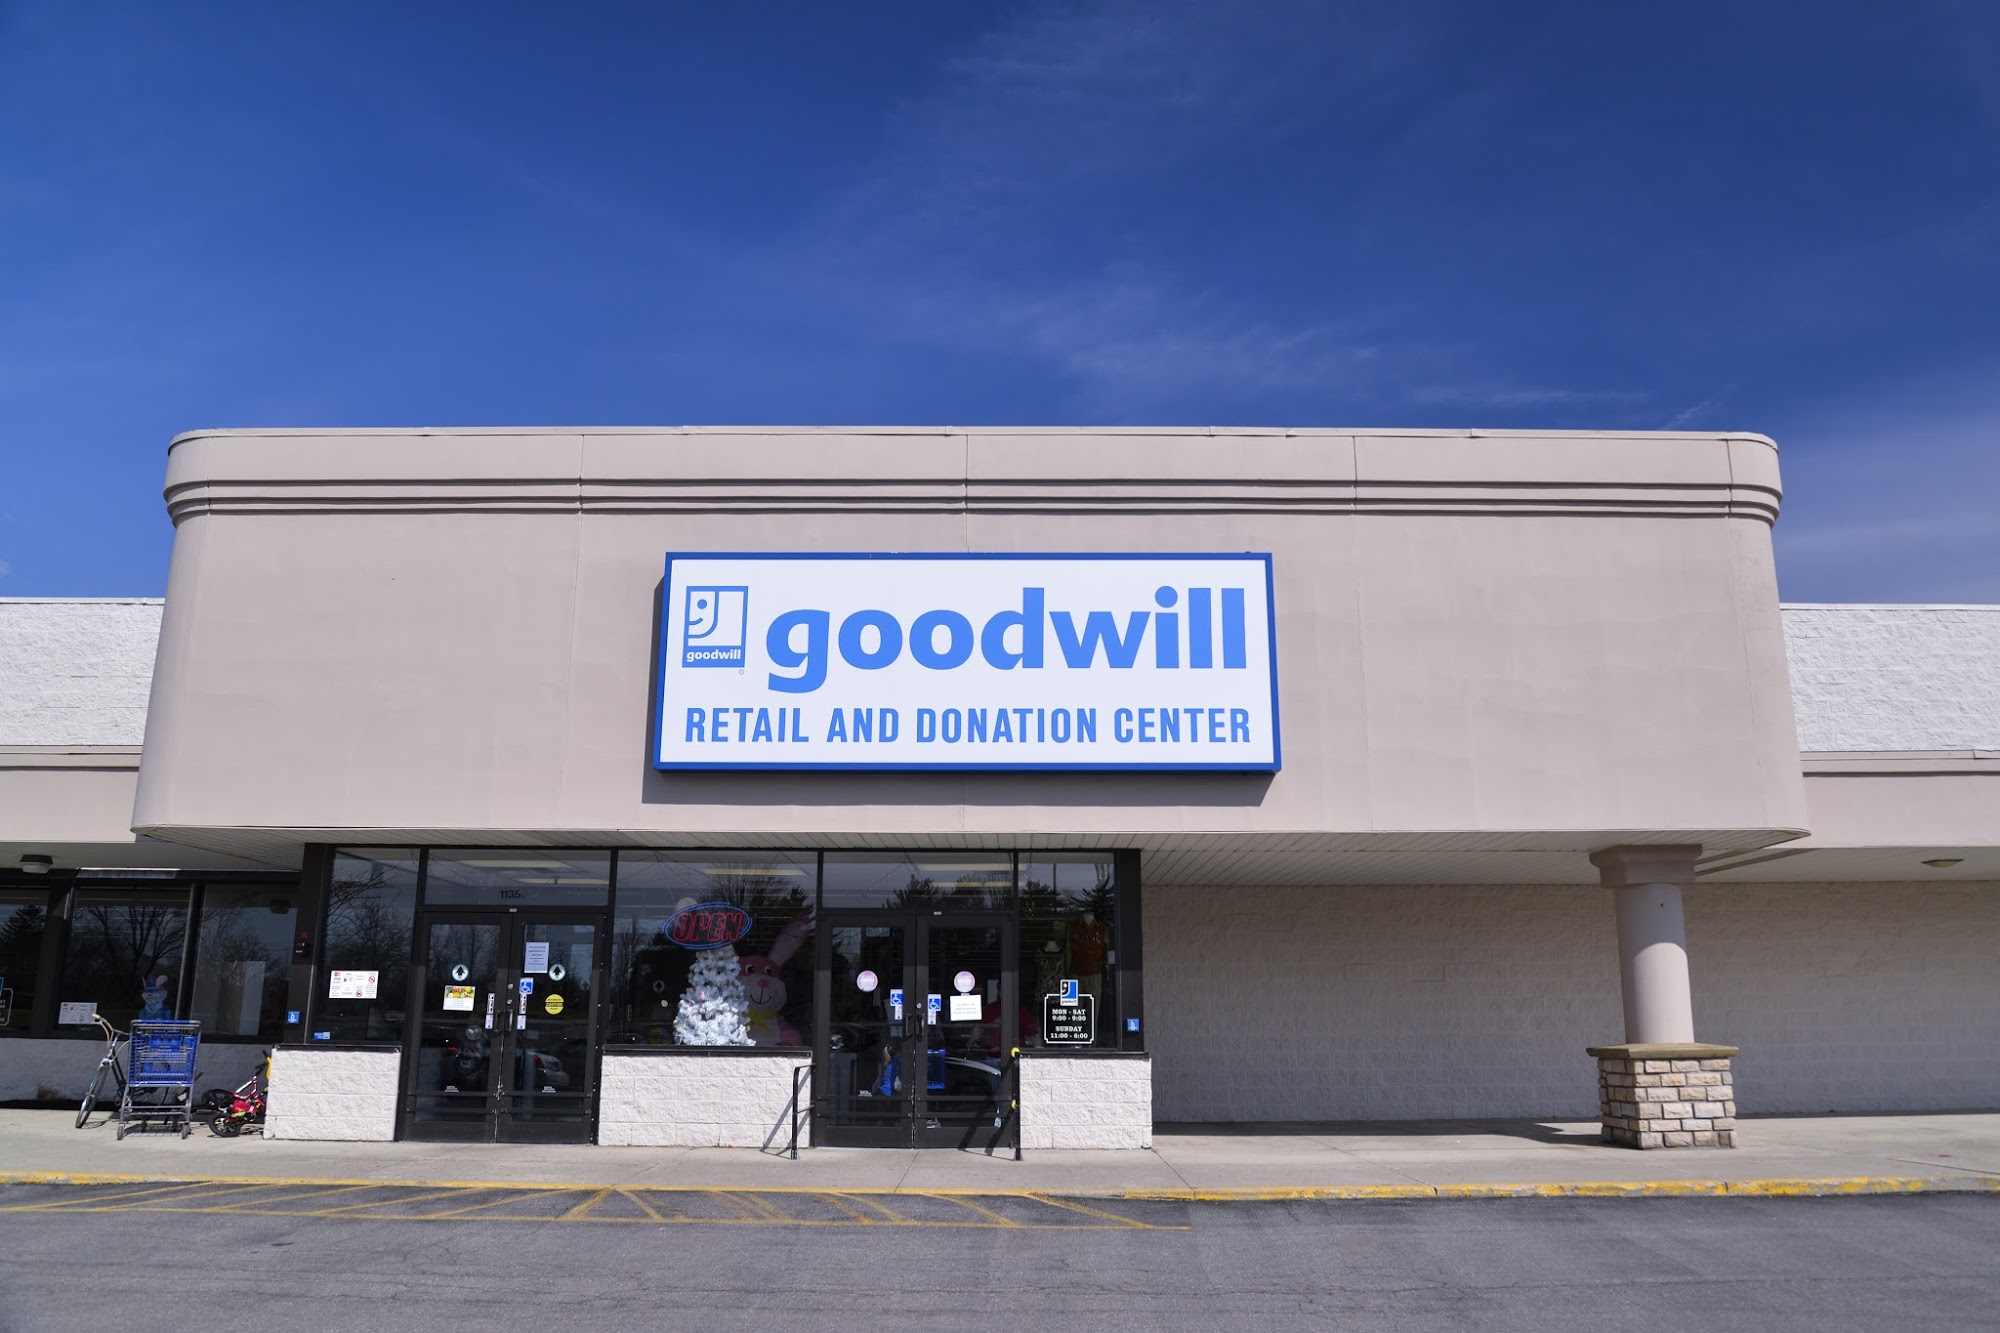 Goodwill - Delaware